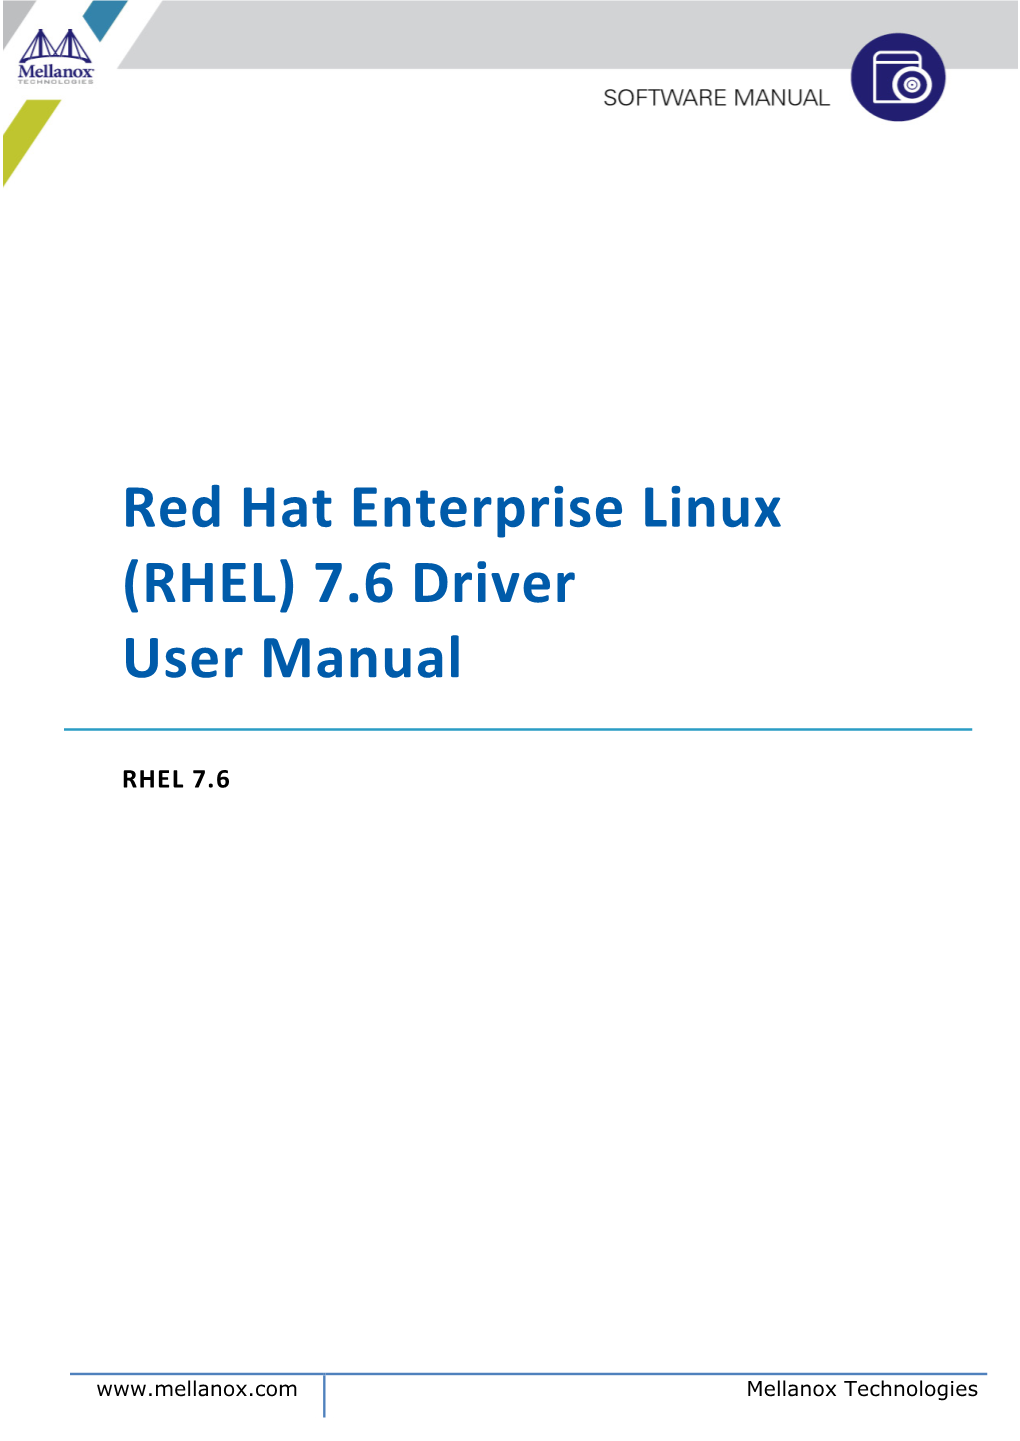 Red Hat Enterprise Linux (RHEL) 7.6 Driver User Manual